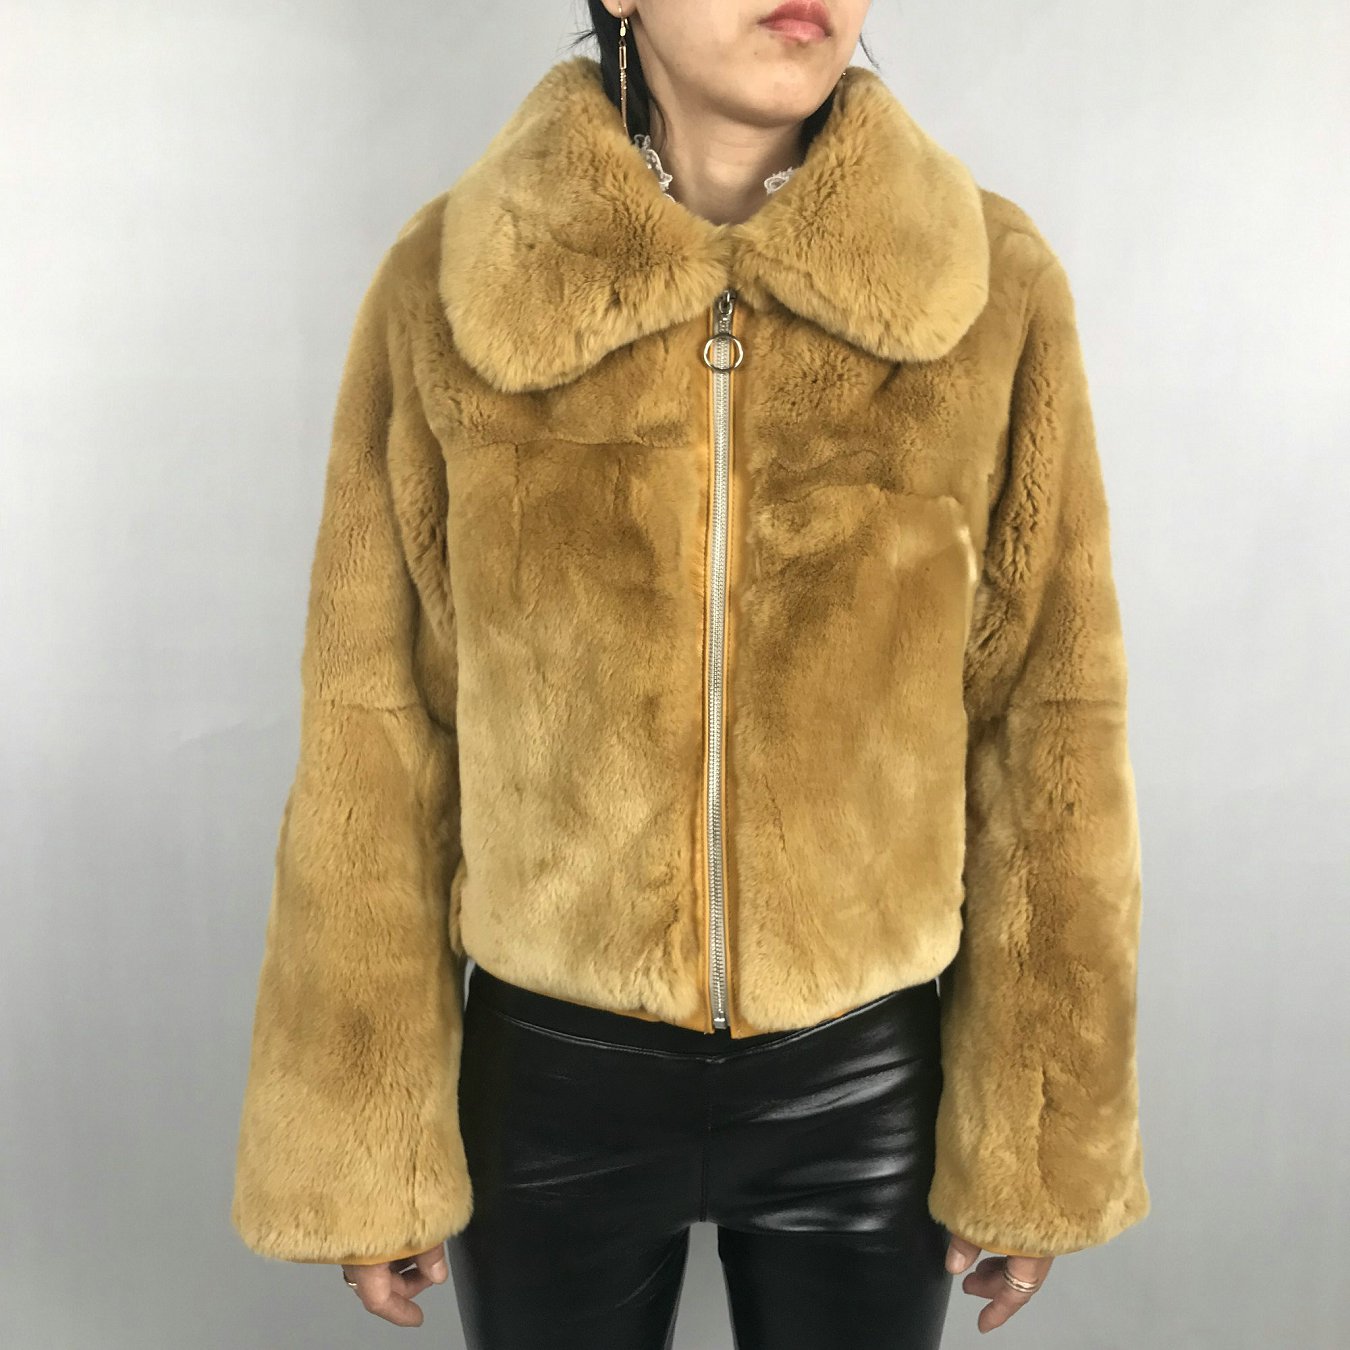 HG7374 Mantel Bulu Asli Musim Dingin Kustom Lengan Panjang Jaket Kelinci Rex Asli Mantel Bulu Wanita